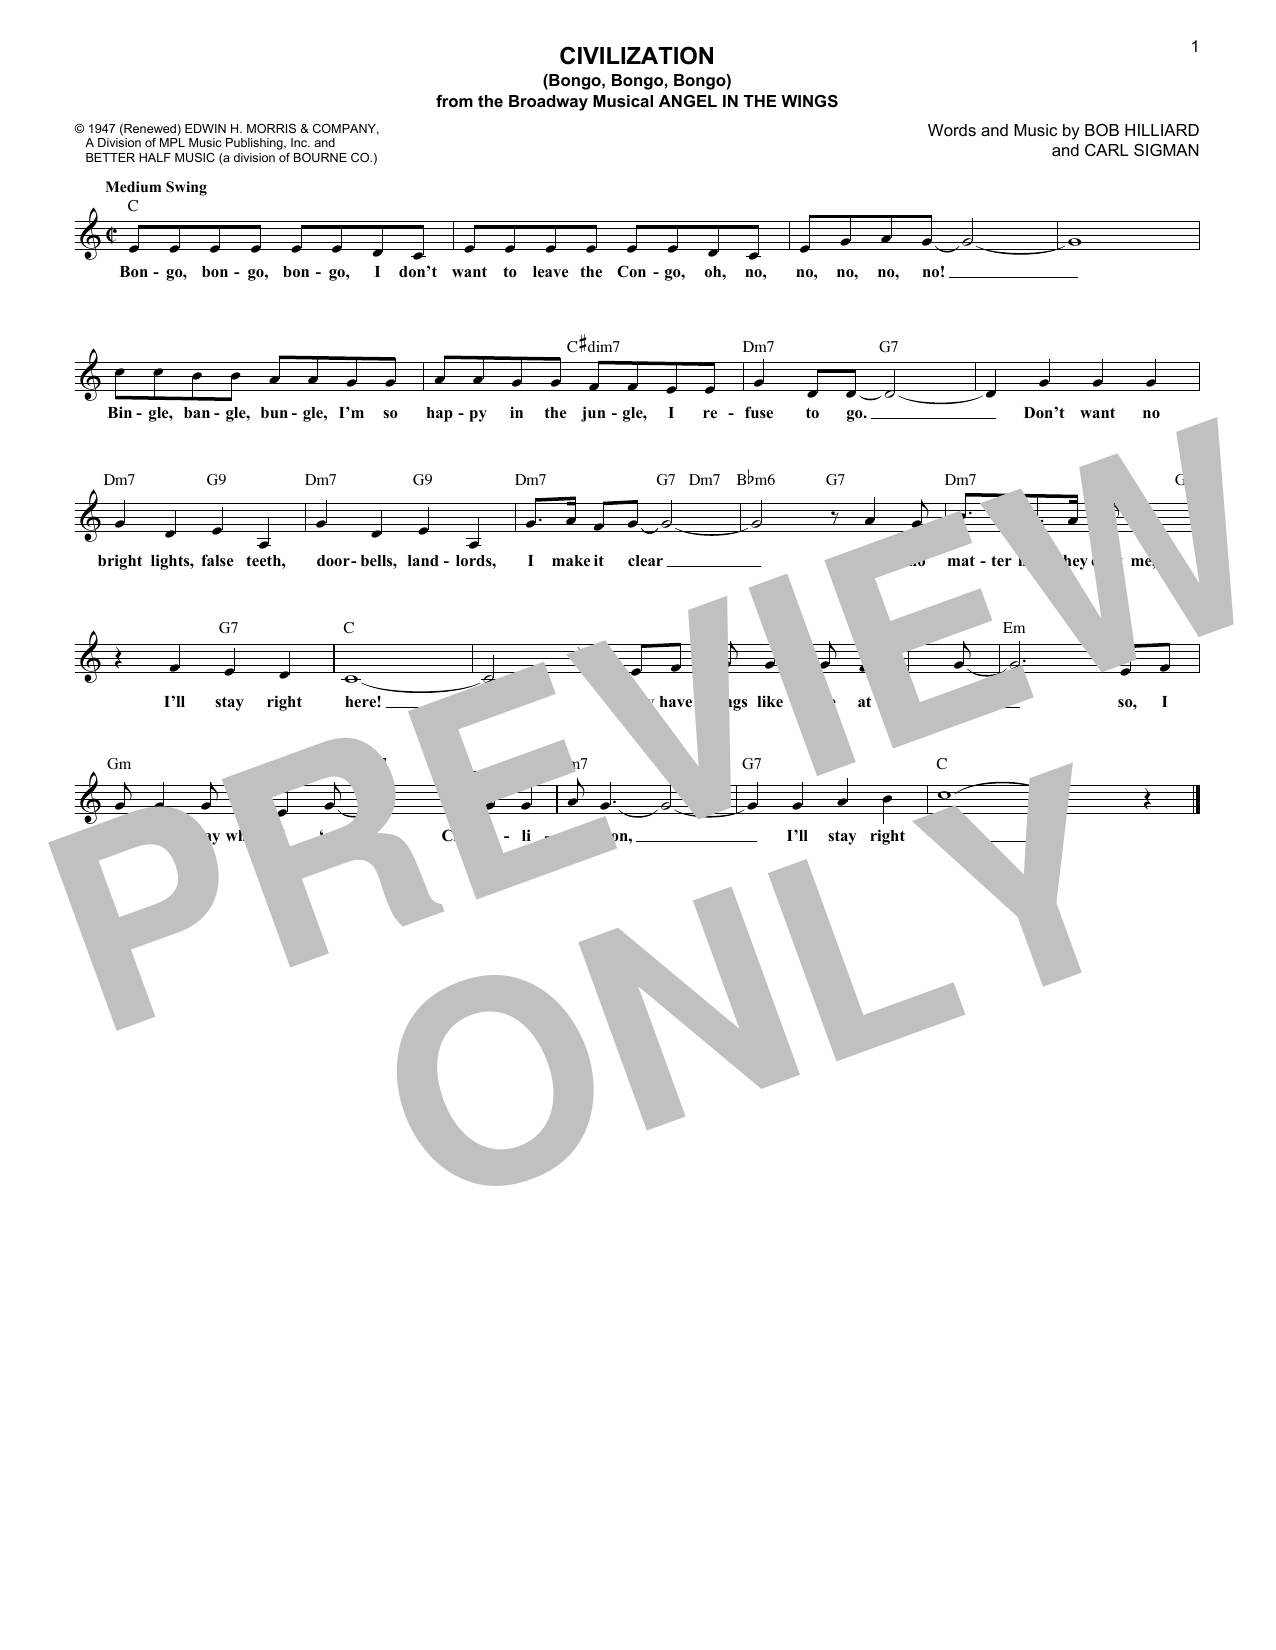 Bob Hilliard Civilization (Bongo, Bongo, Bongo) Sheet Music Notes & Chords for Melody Line, Lyrics & Chords - Download or Print PDF